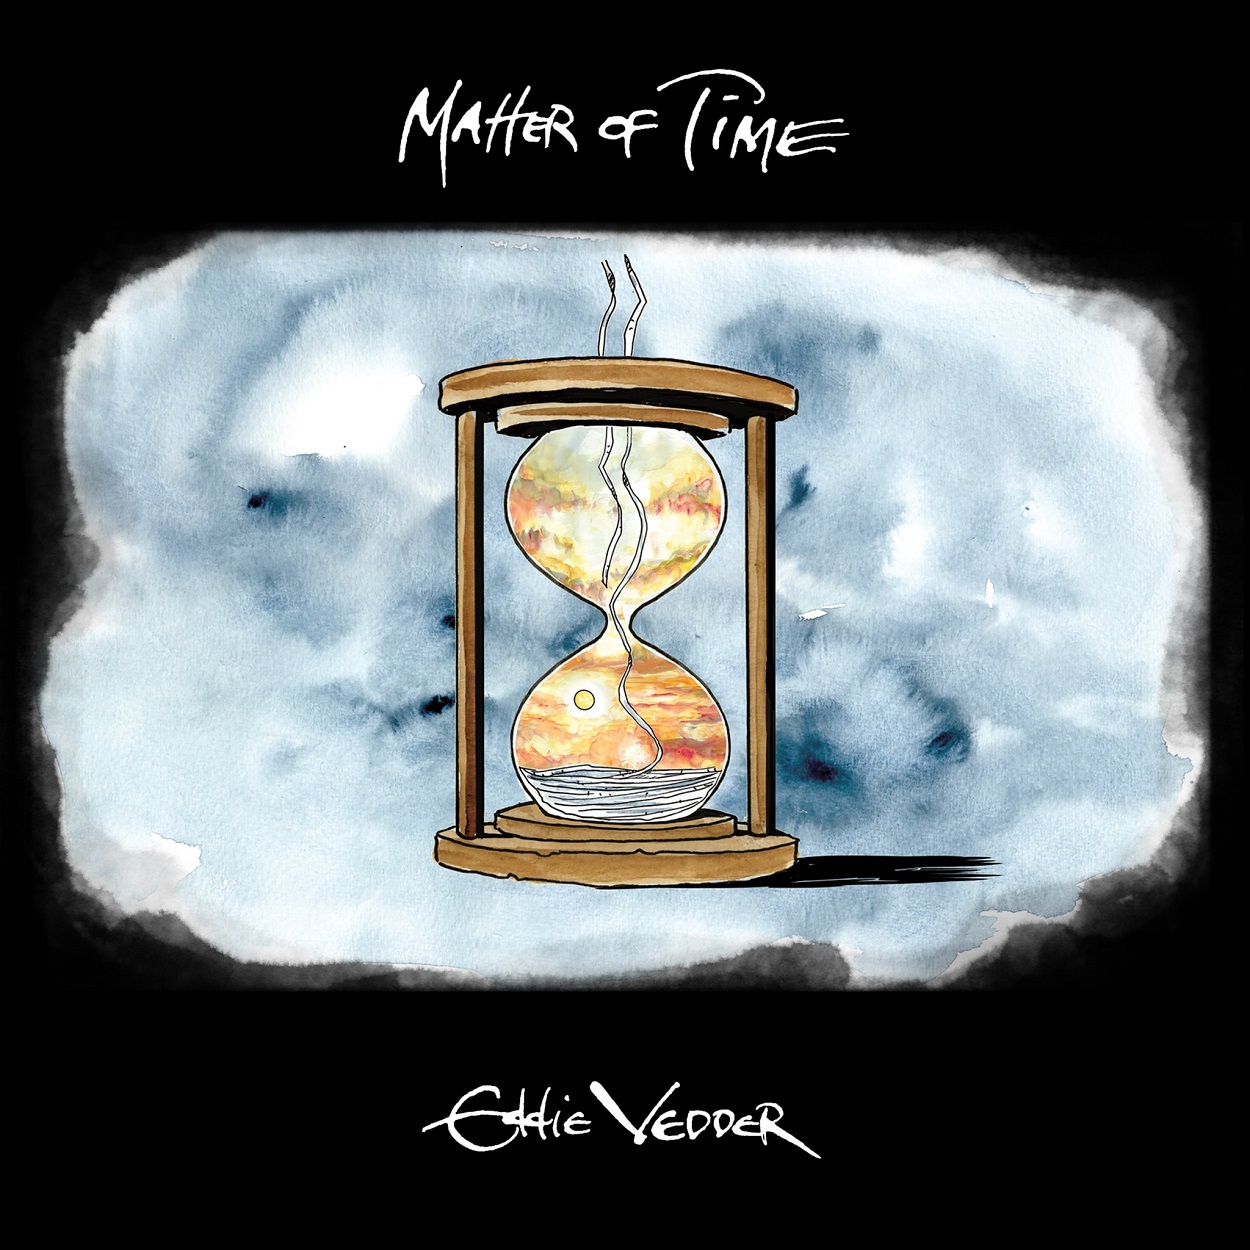 Eddie Vedder "Matter Of Time / Say Hi" 7" (RSD 2021)